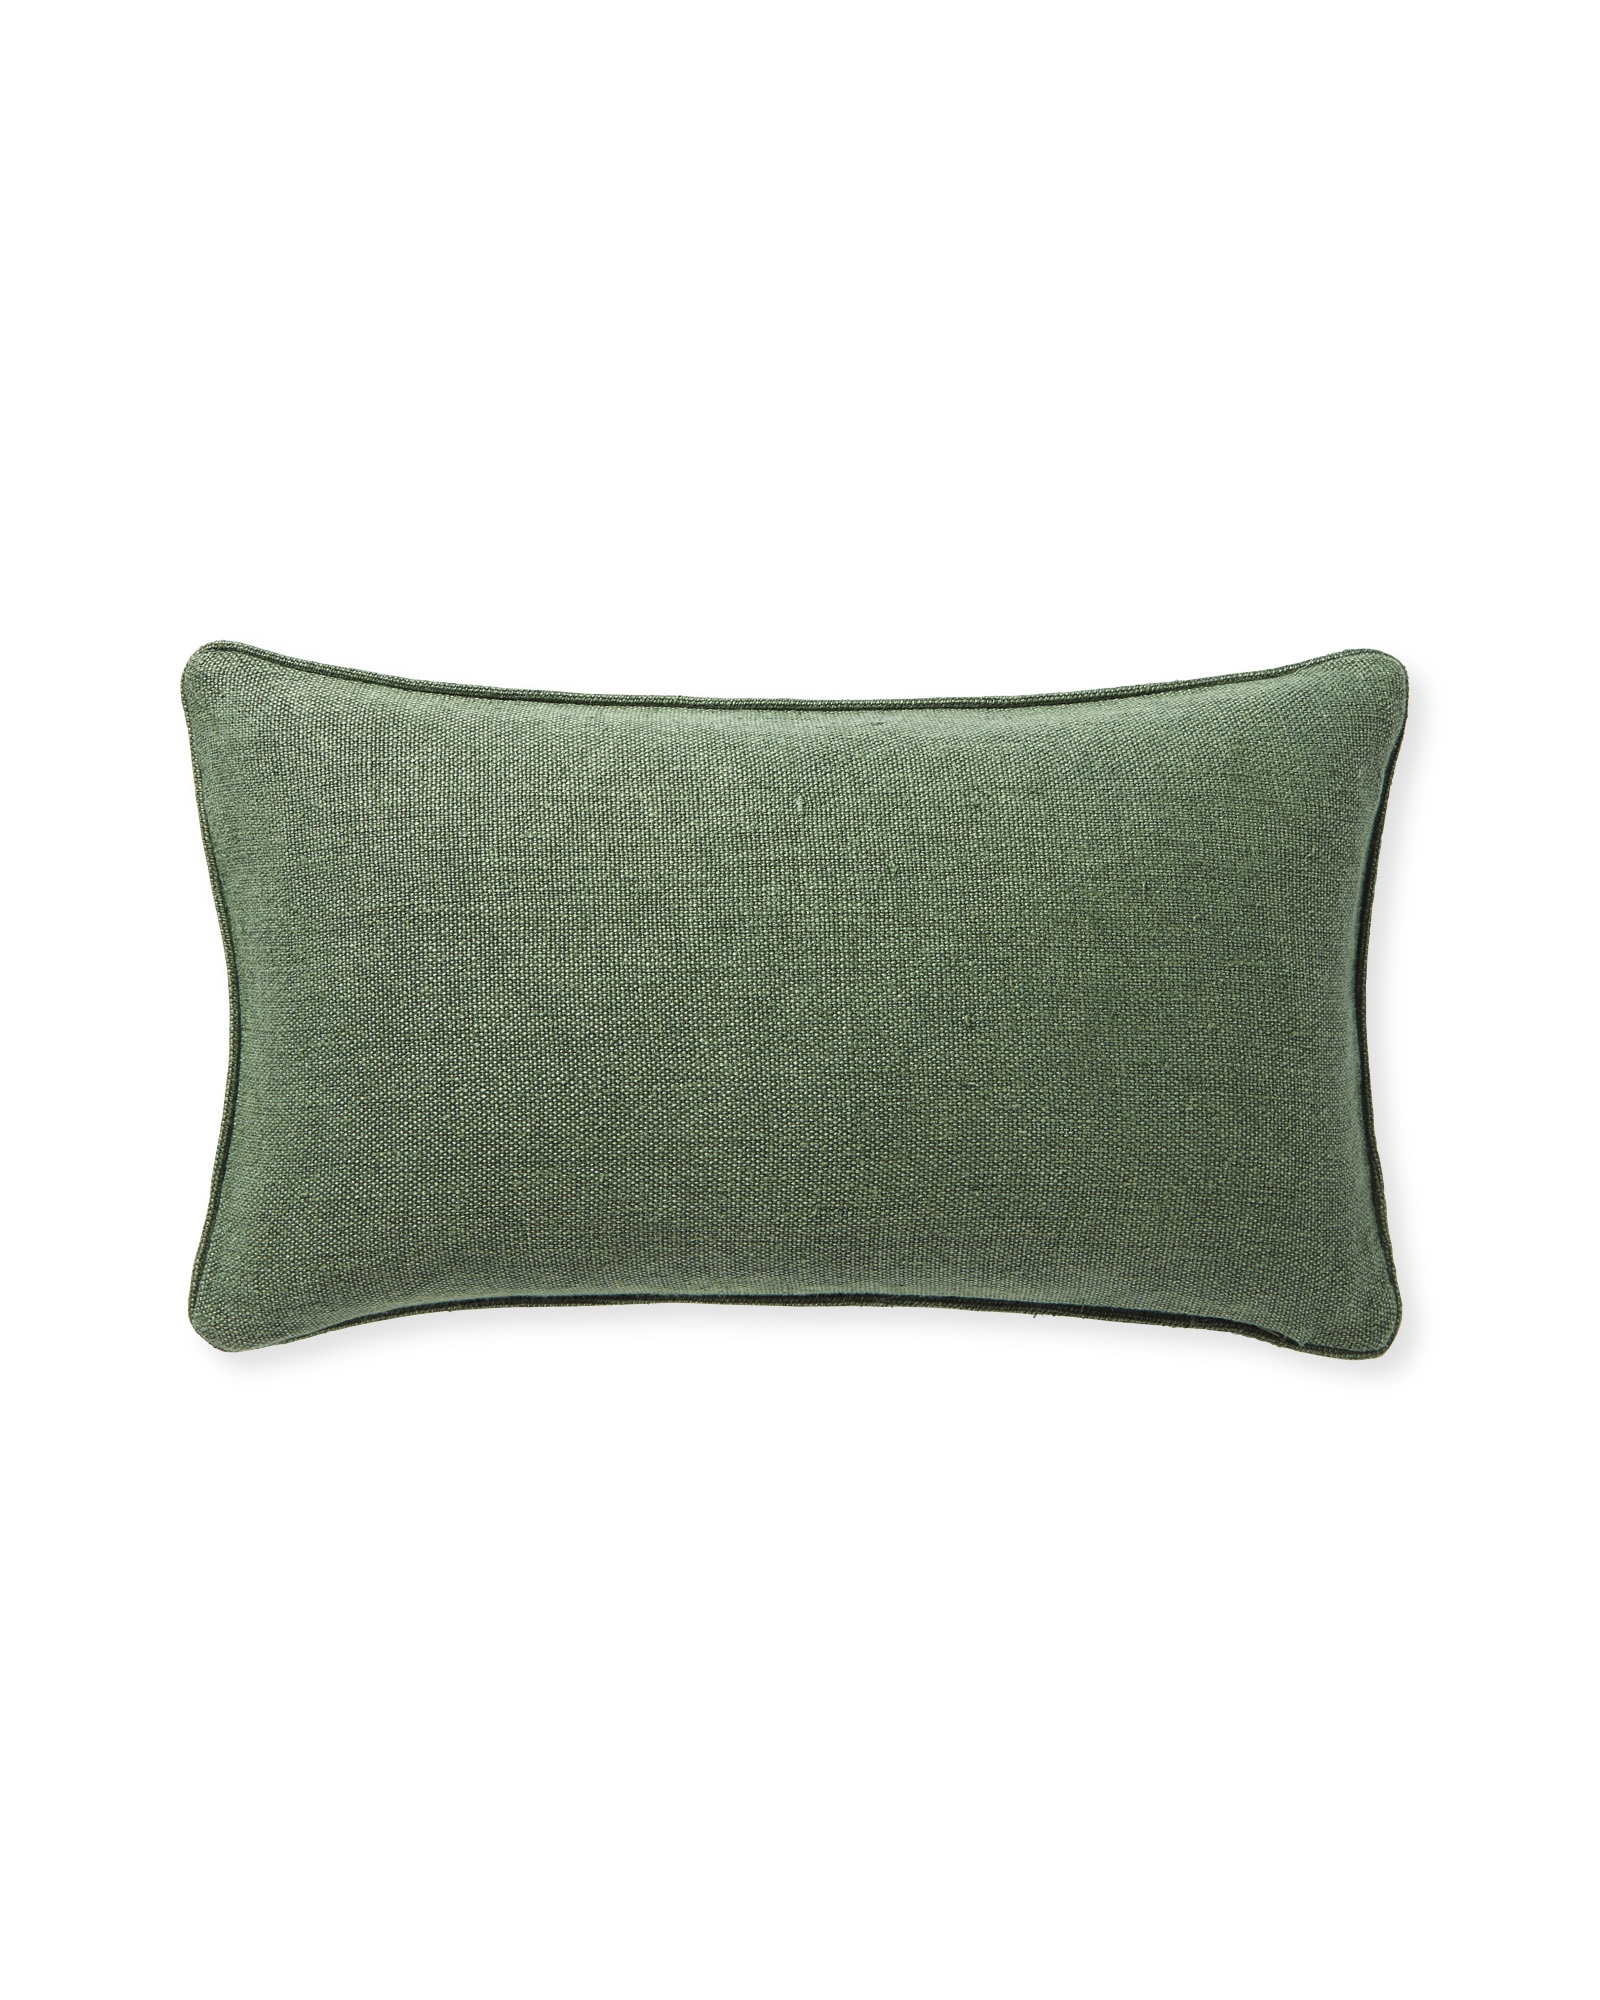 Miramonte Pillow Cover - Image 1